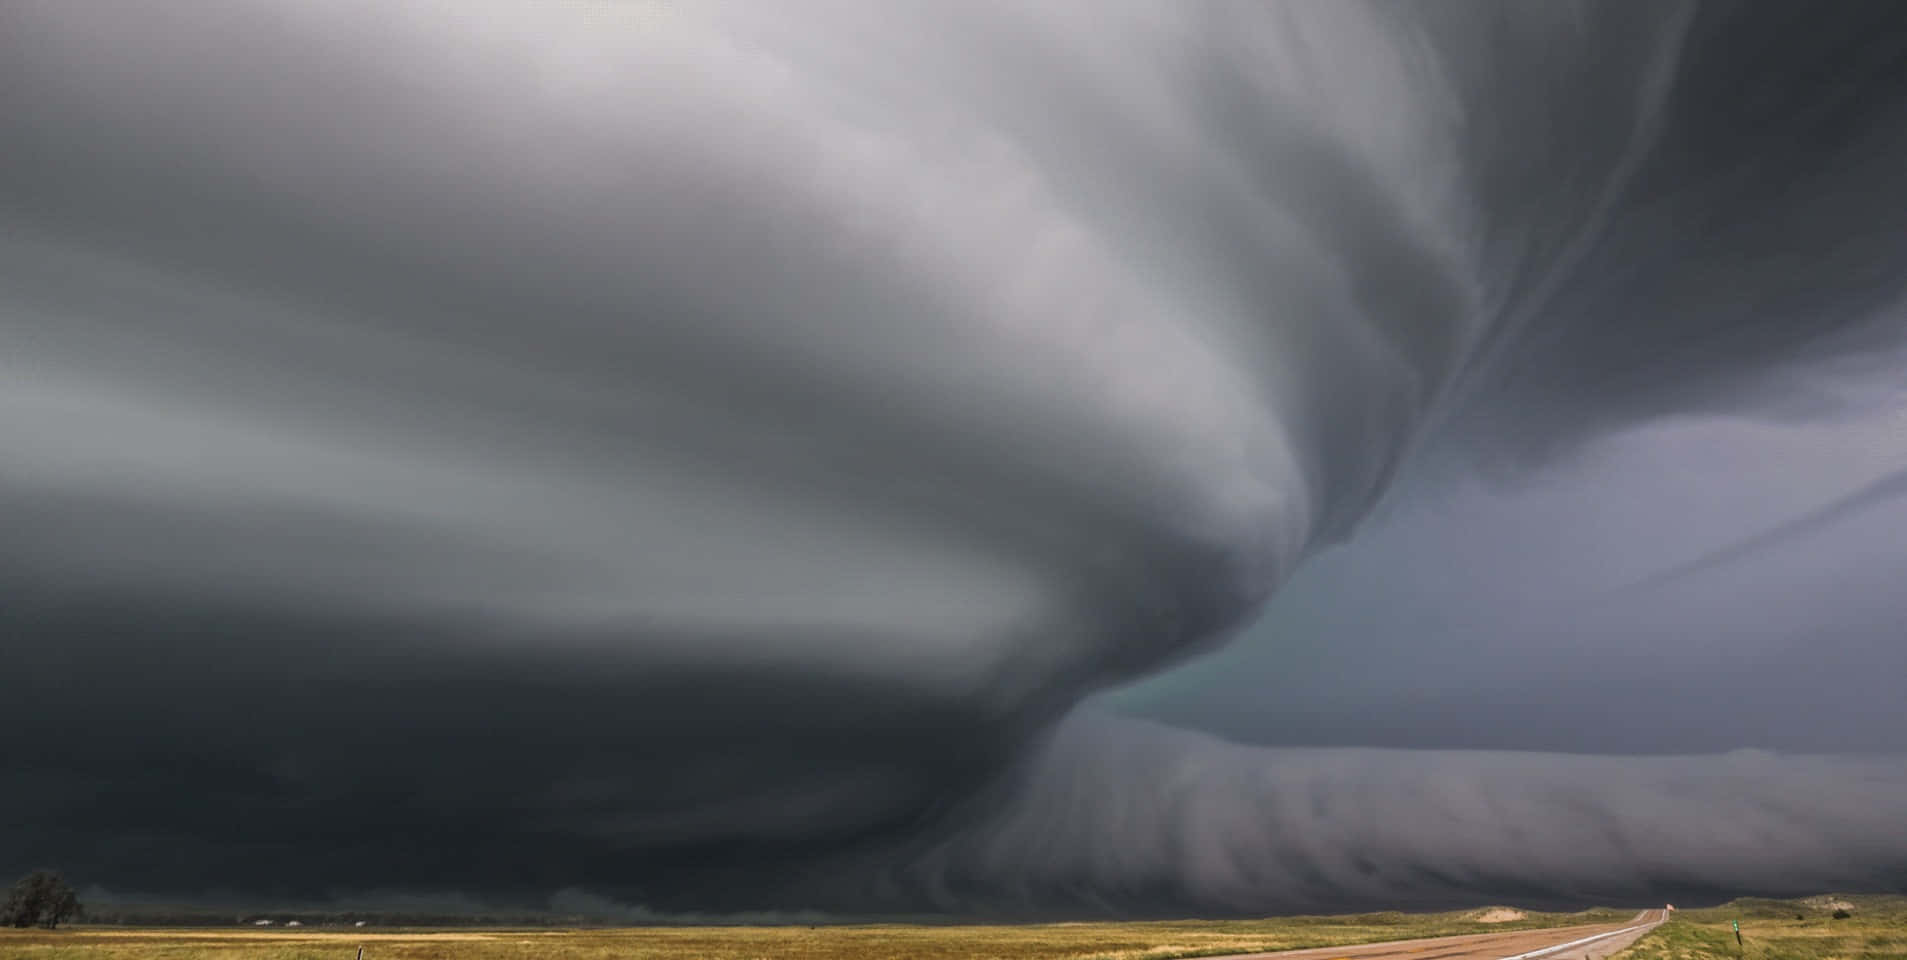 A powerful tornado touching down on a rural landscape.